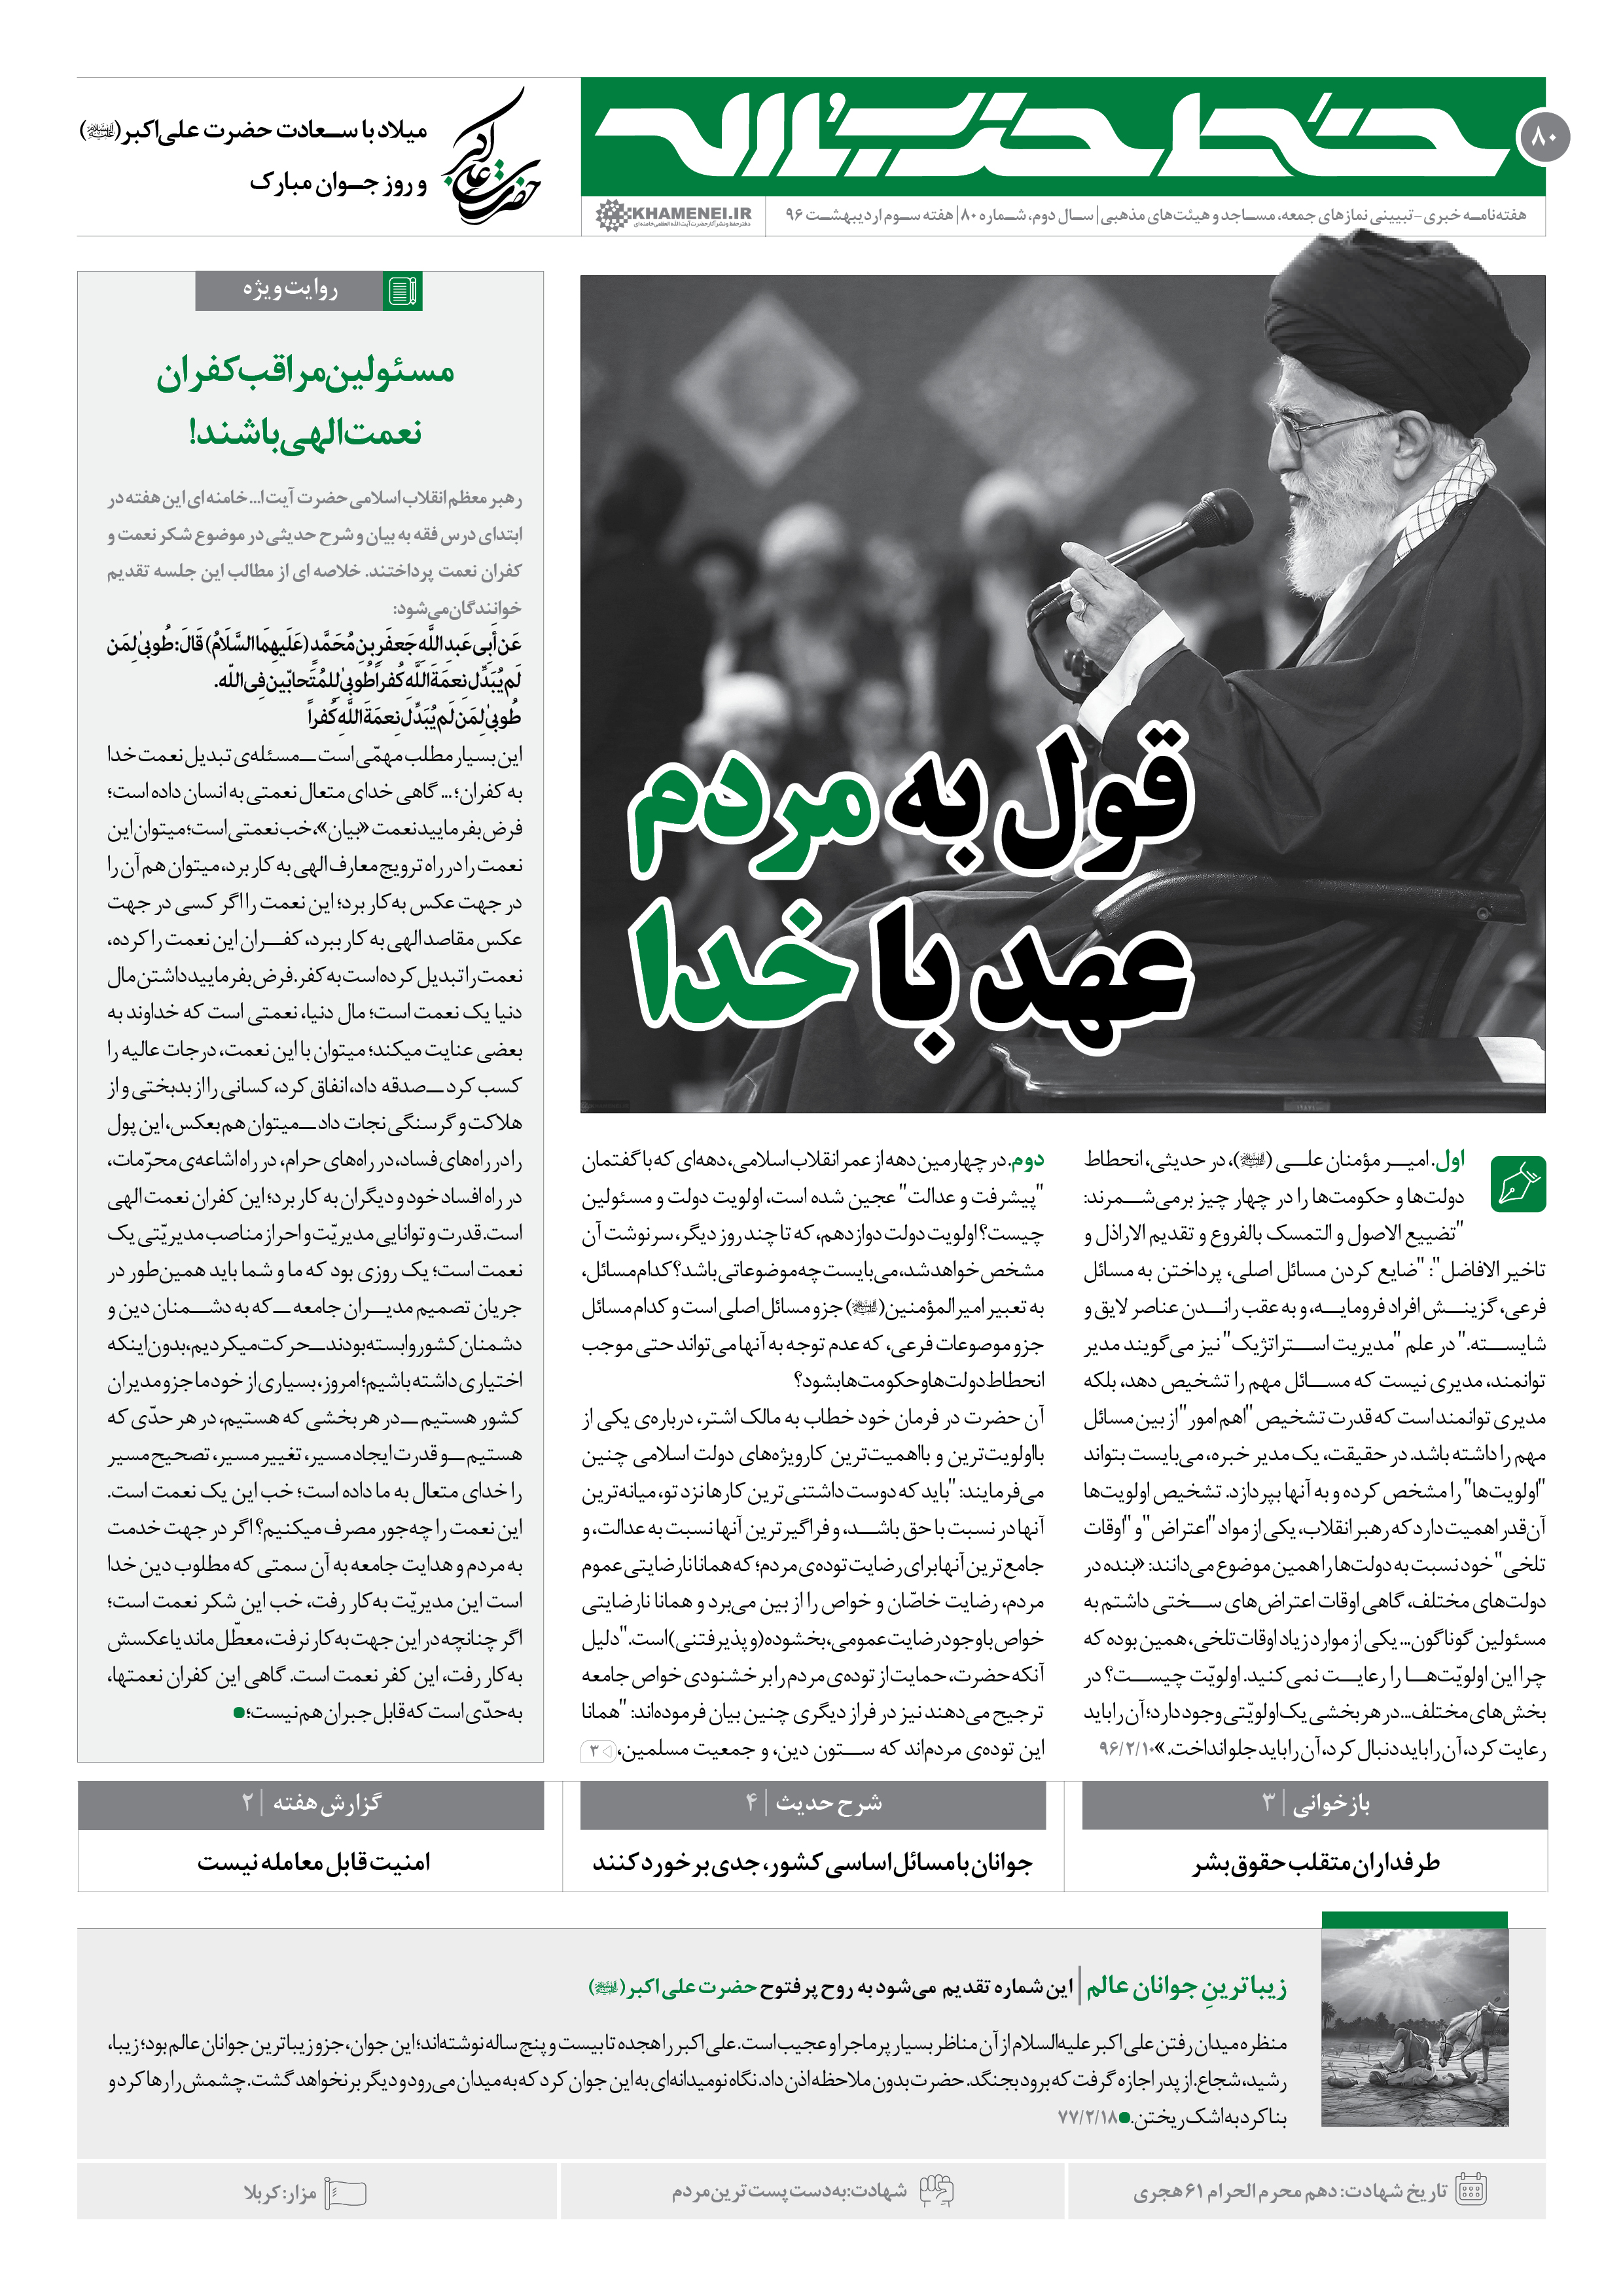 http://farsi.khamenei.ir/ndata/news/weekly/files/109//page_1.jpg